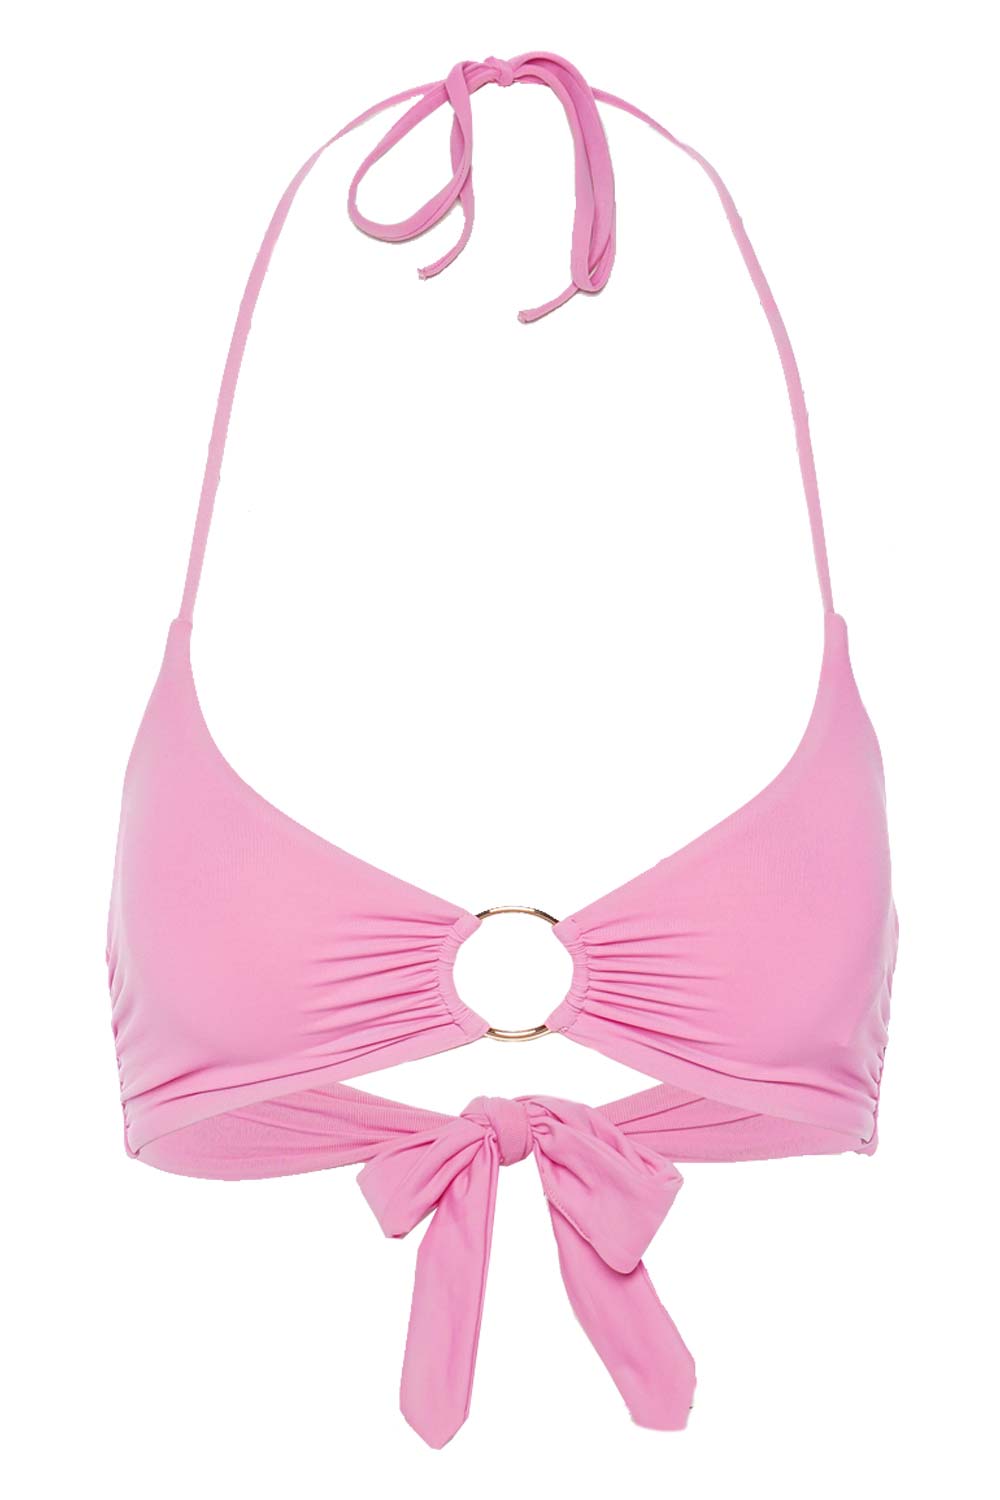 Melissa Odabash Hamburg Pink Halter Bikini Top